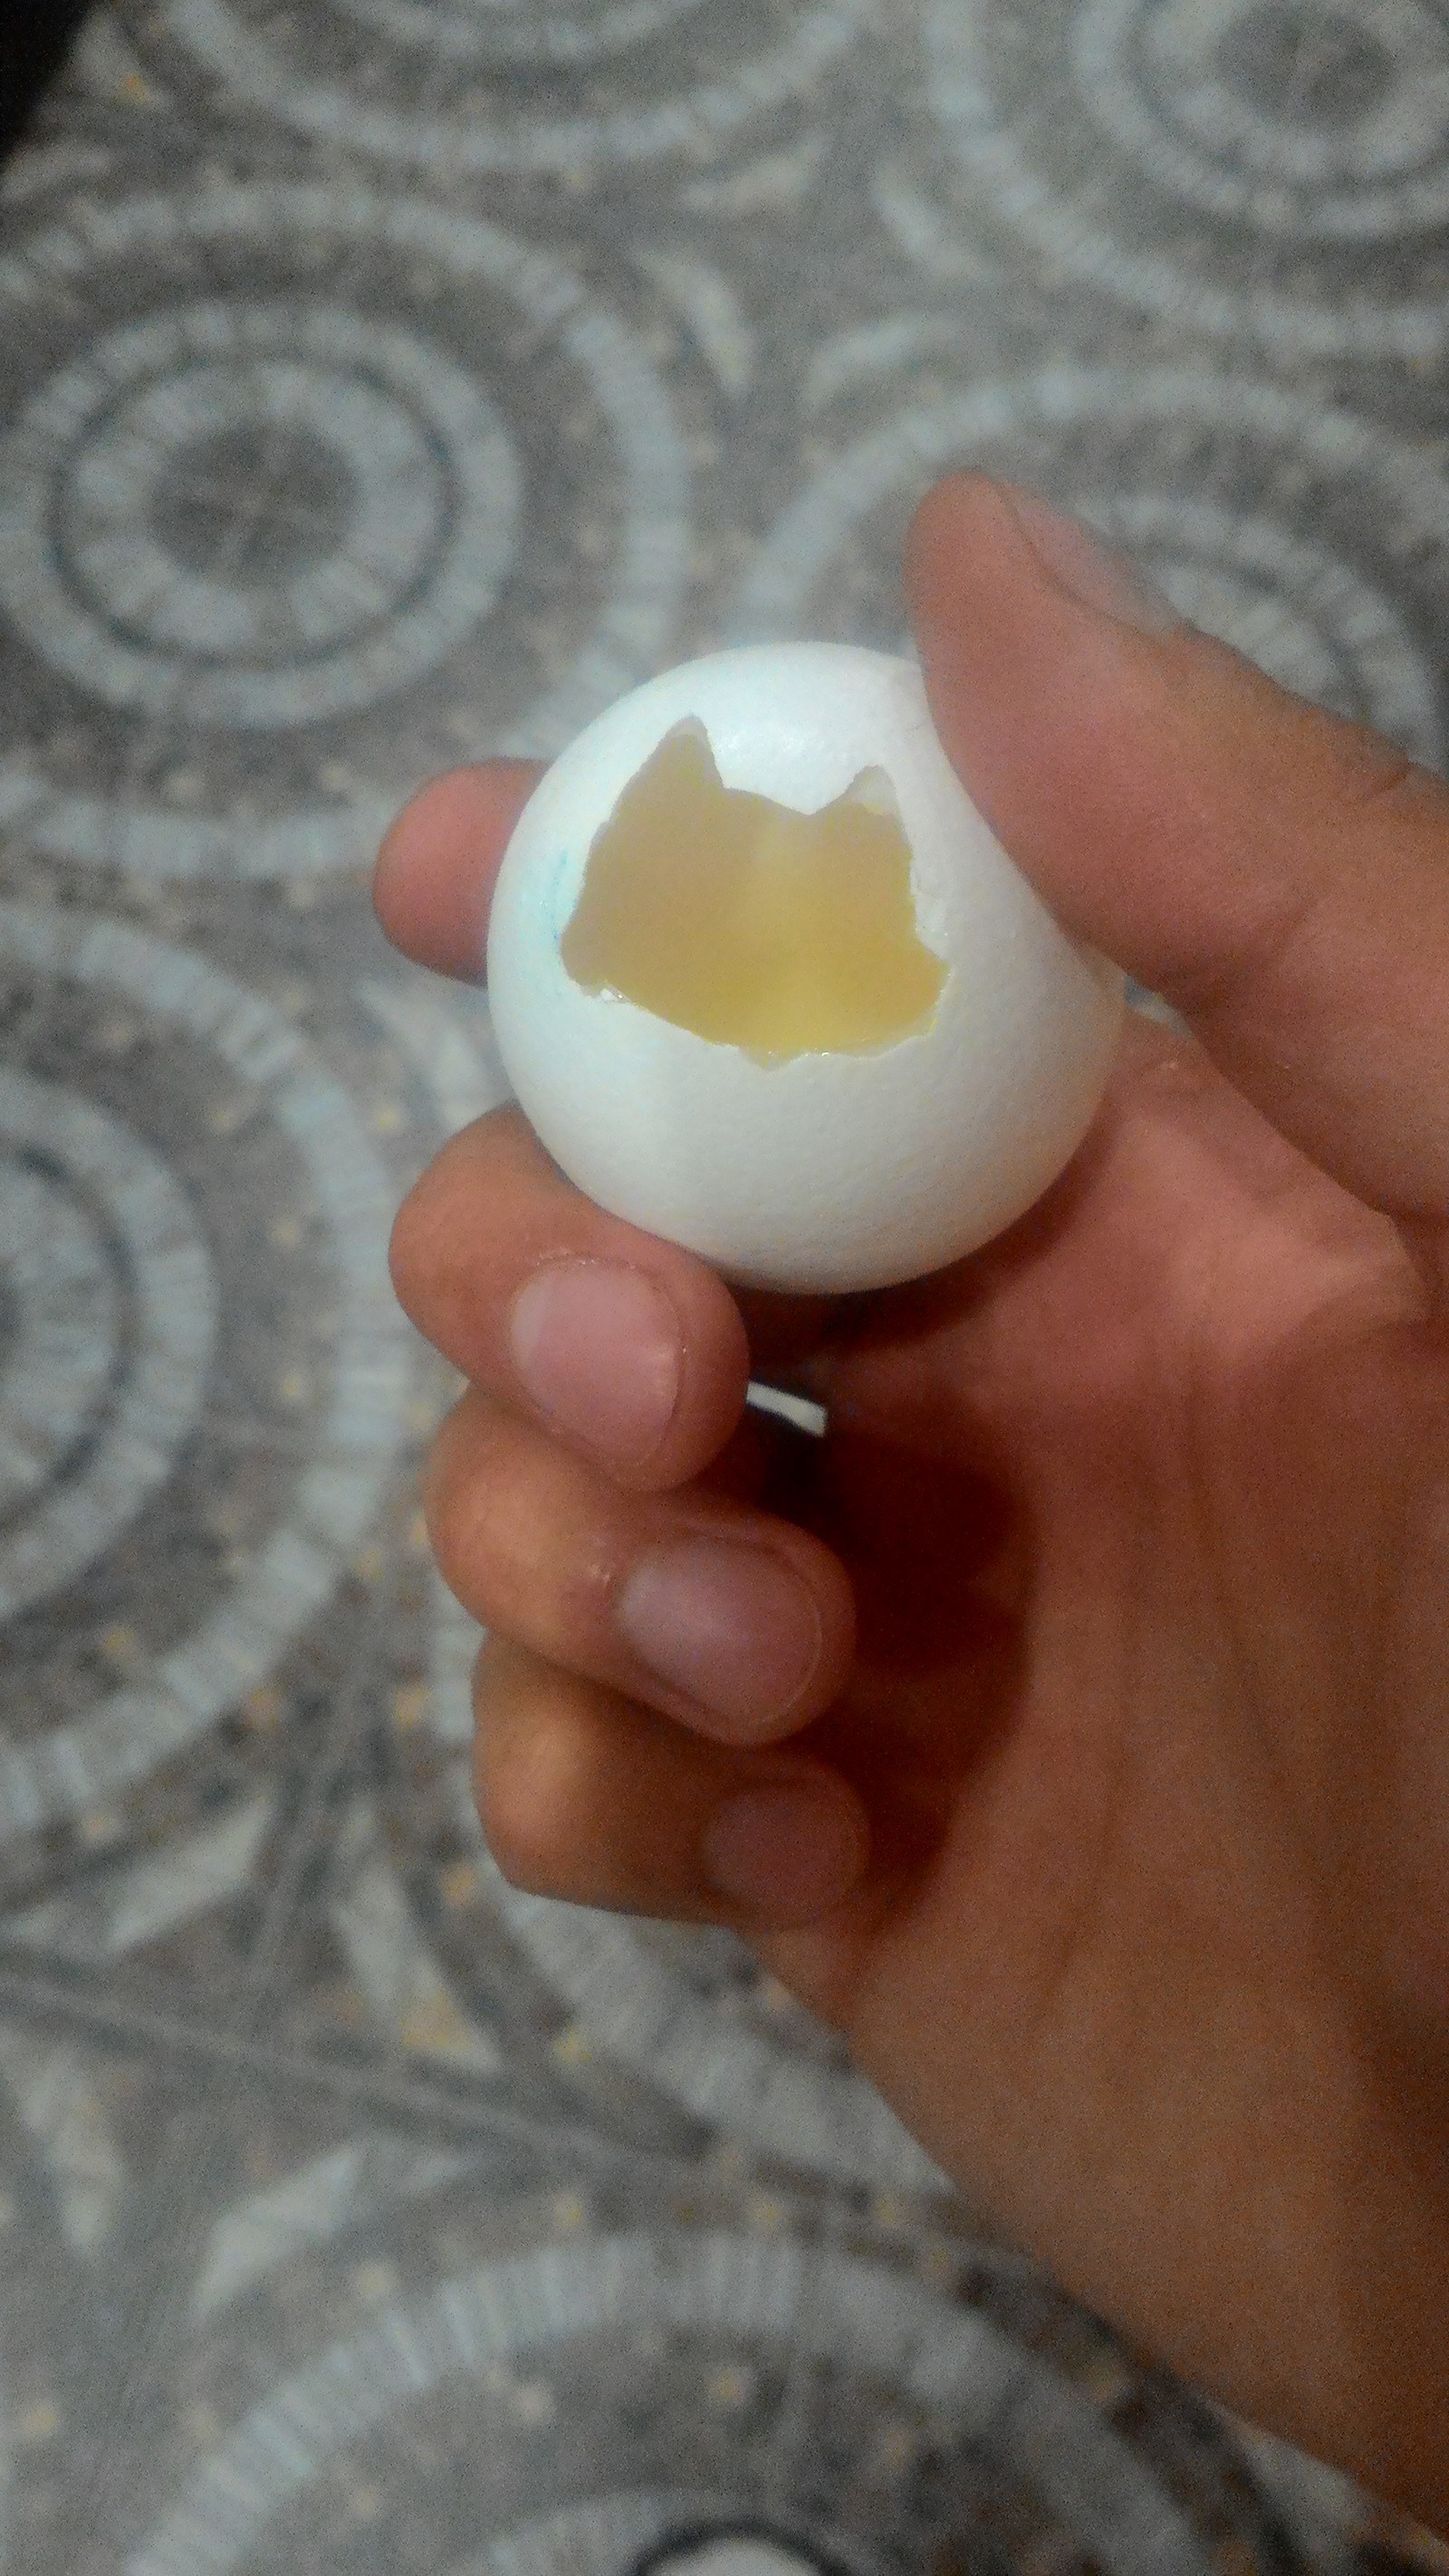 Broke an egg. cat - Suddenly, Dinner, Eggs, cat, First post